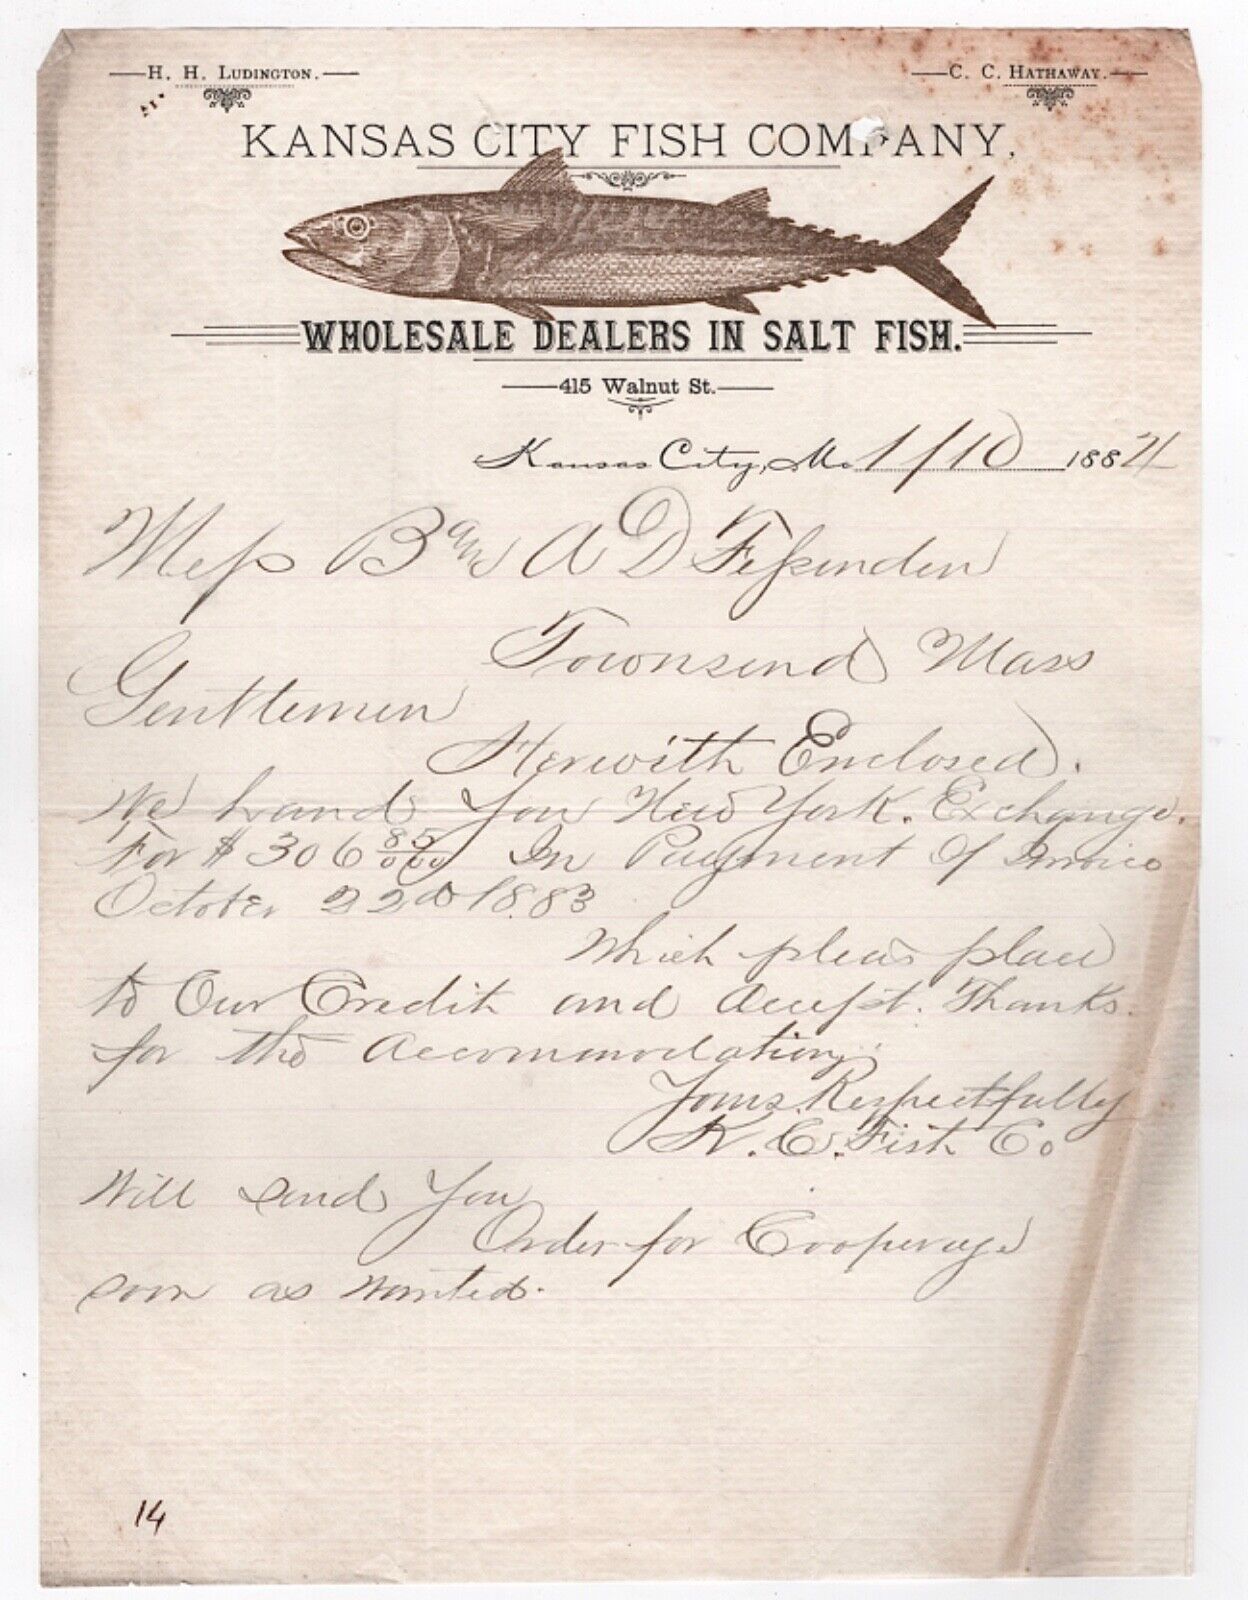 1887 EARLY KANSAS CITY FISH CO LETTERHEAD SALT FISH WALNUT SR KANSAS CITY MO